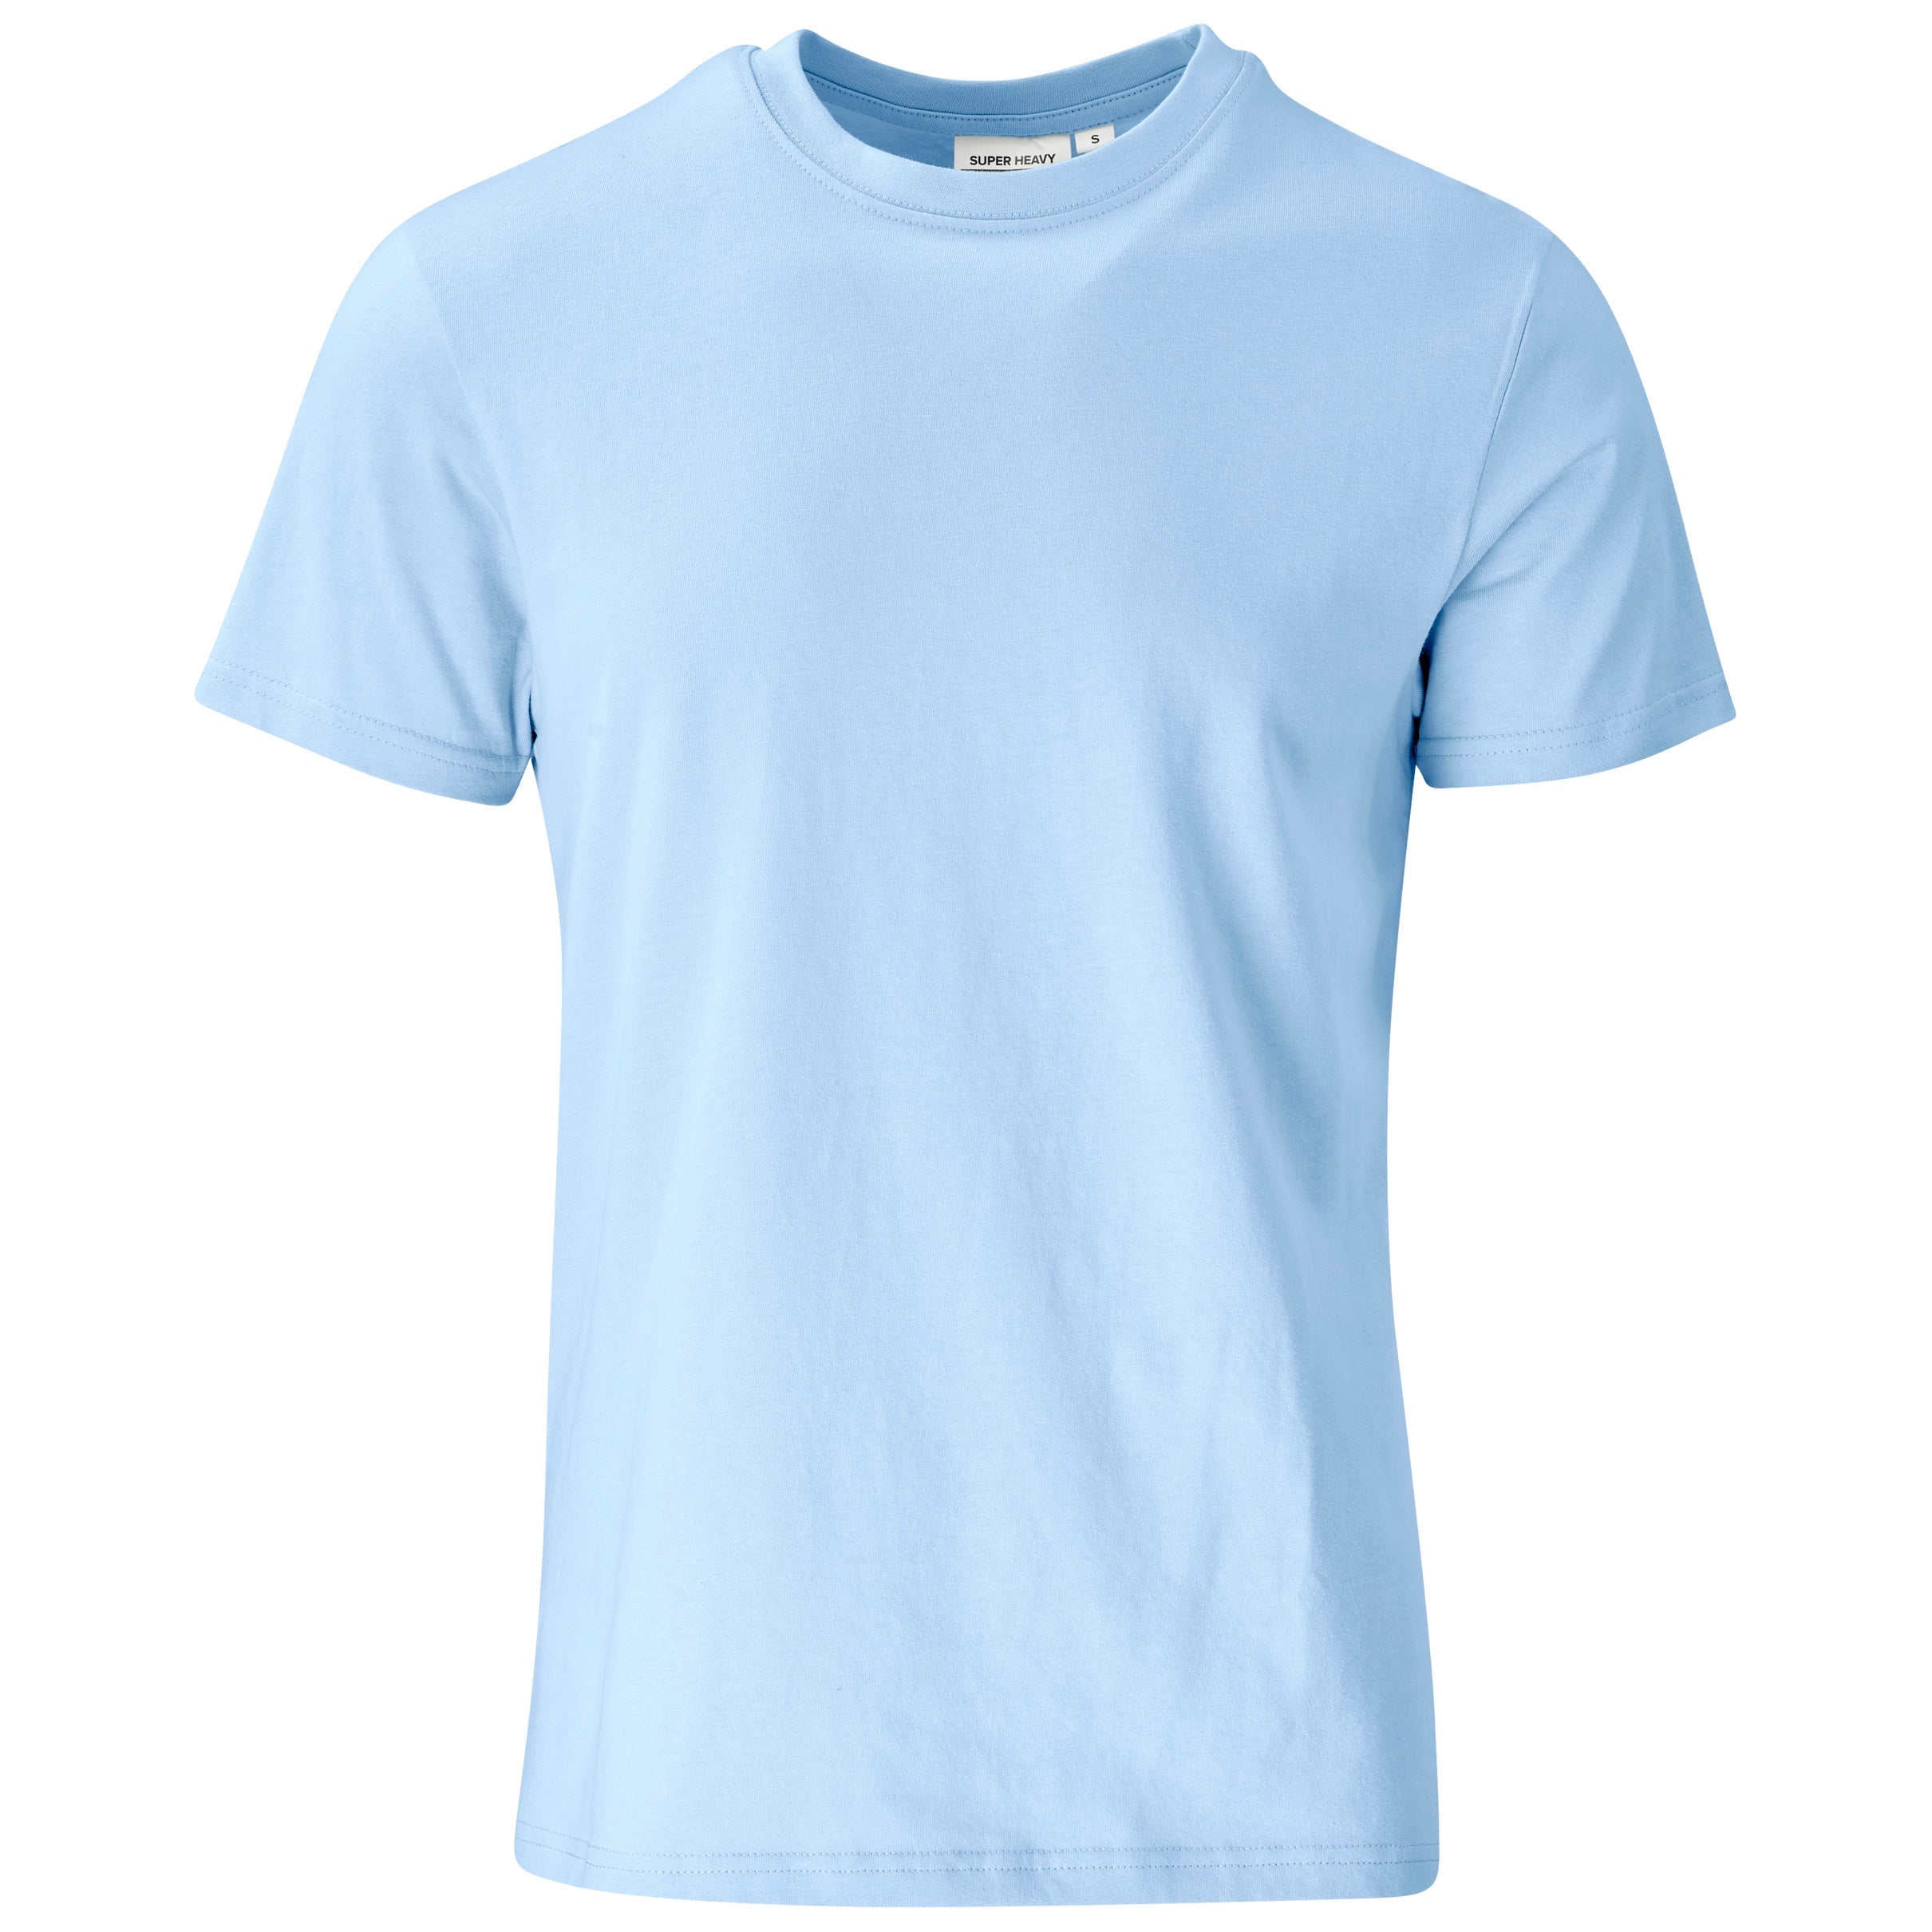 Unisex Super Club 180 T-Shirt-L-Light Blue-LB